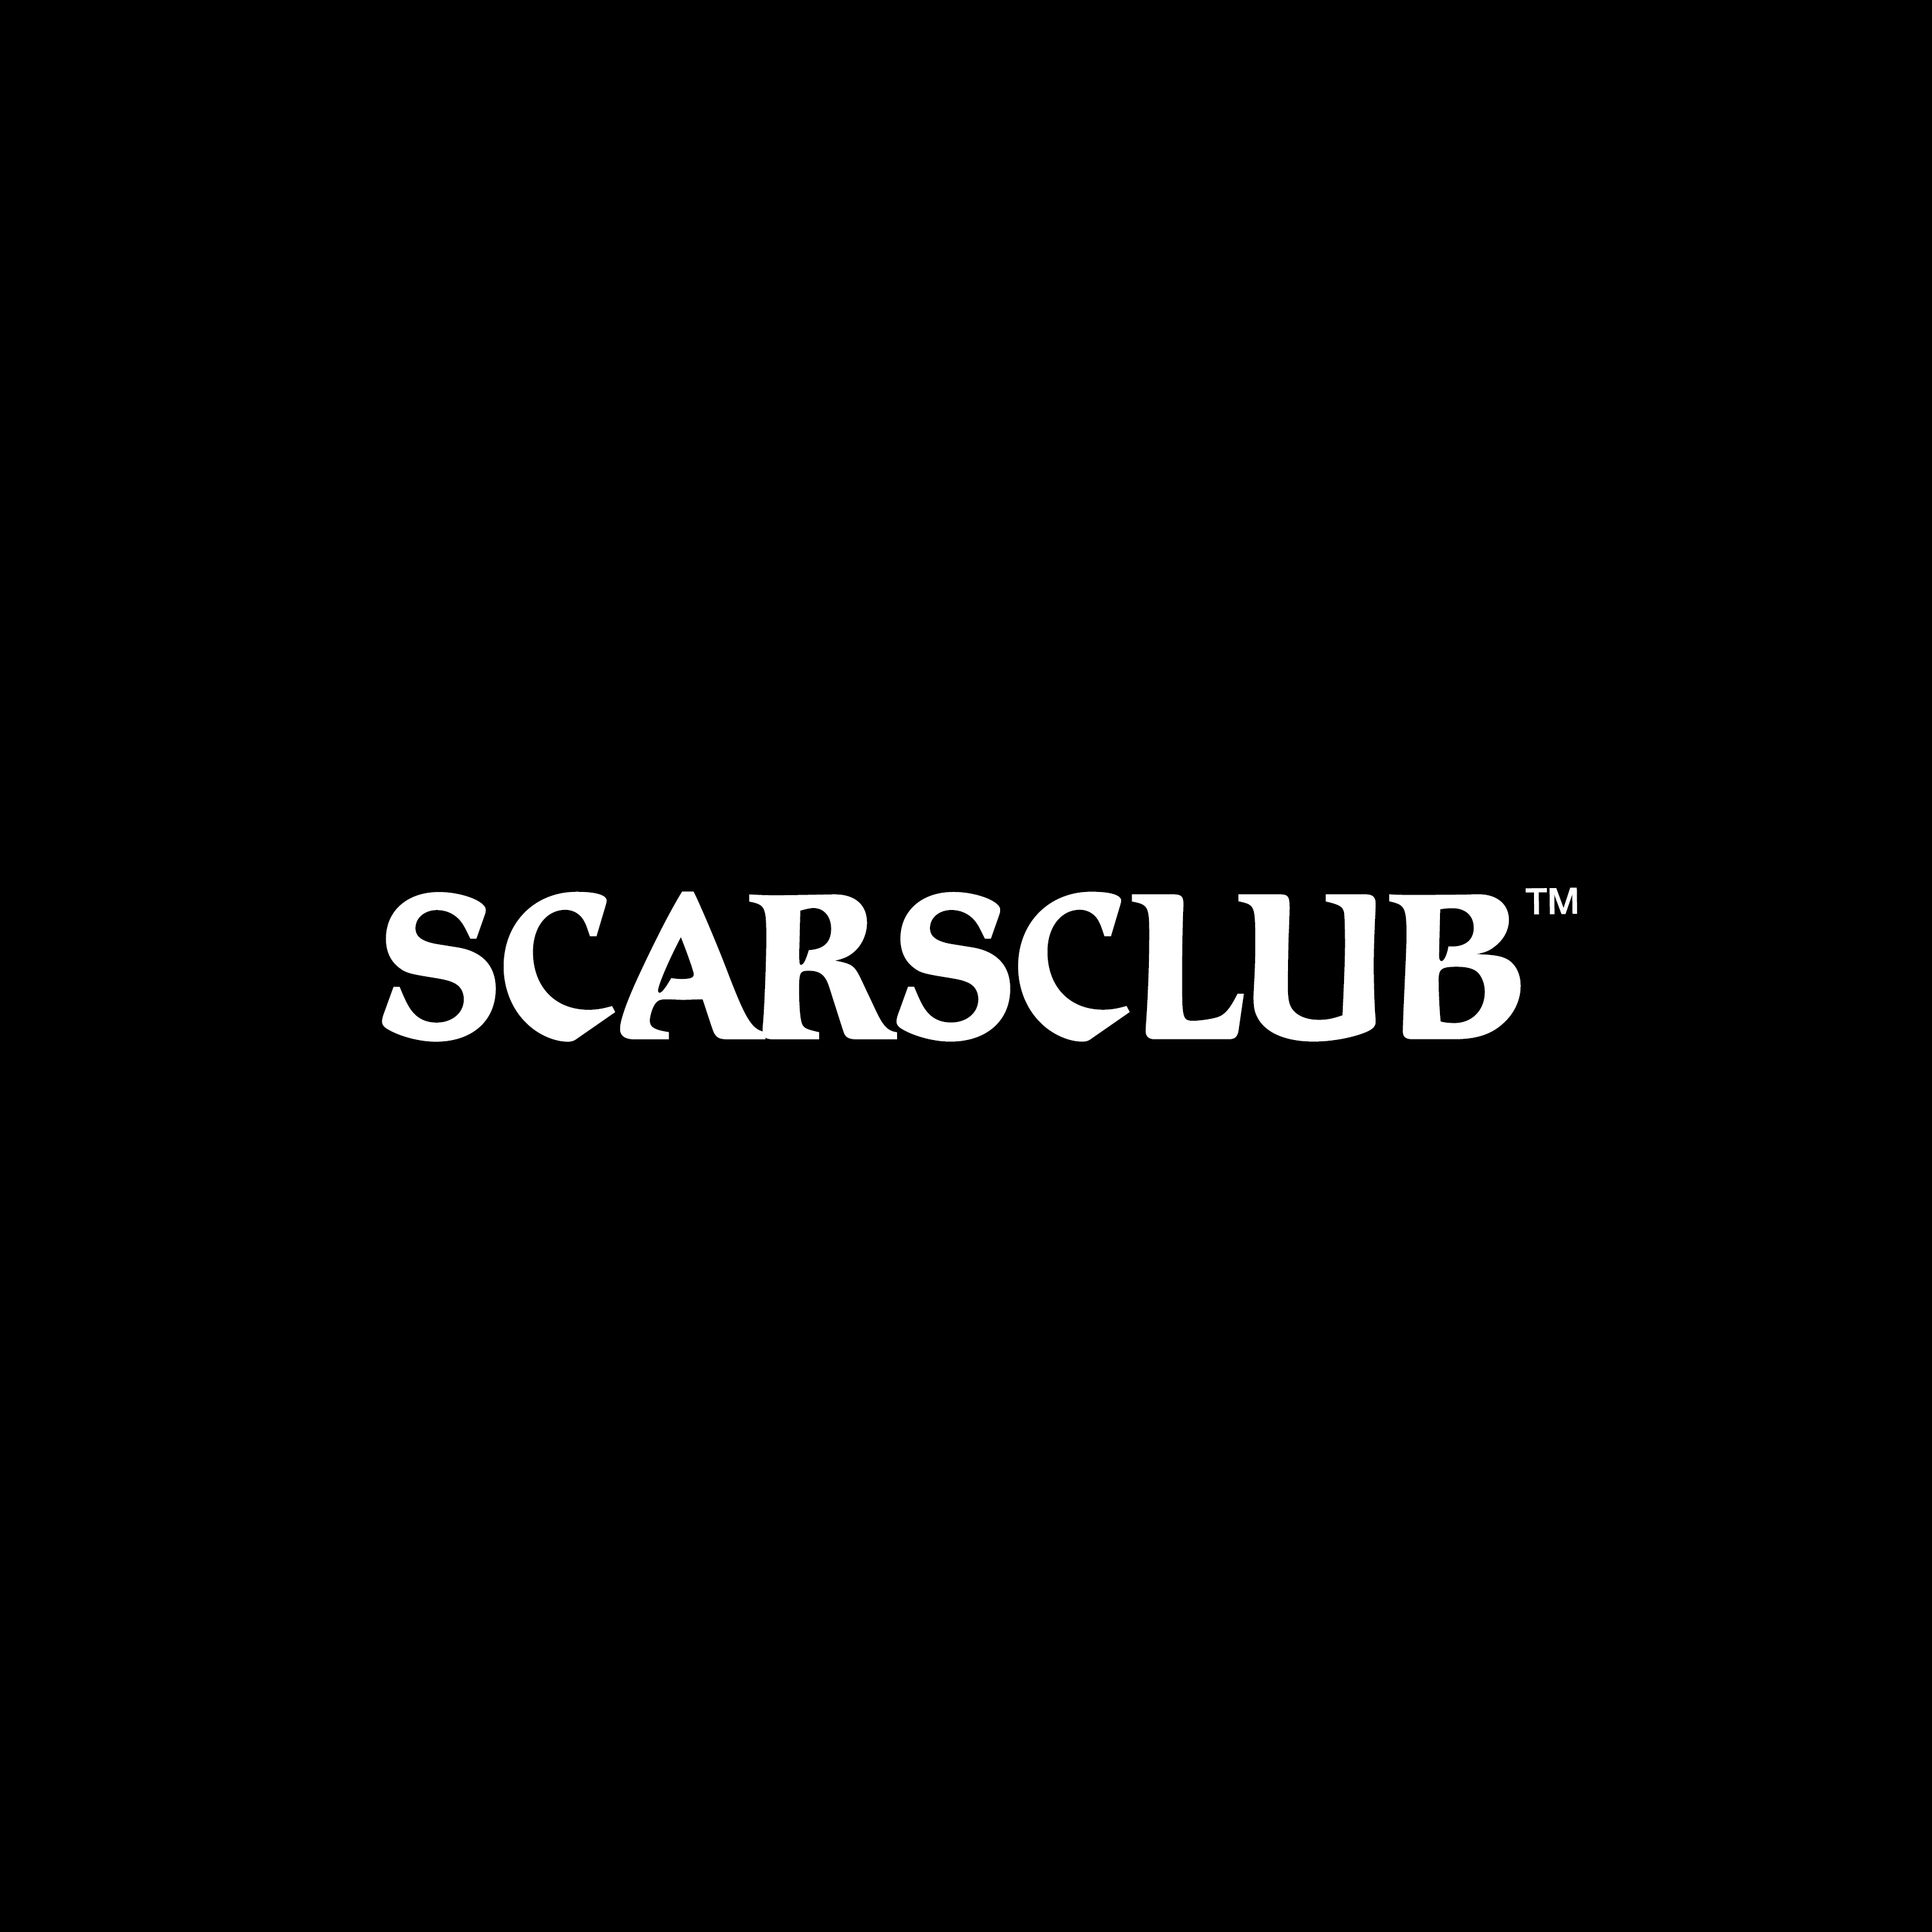 SCARSCLUB™